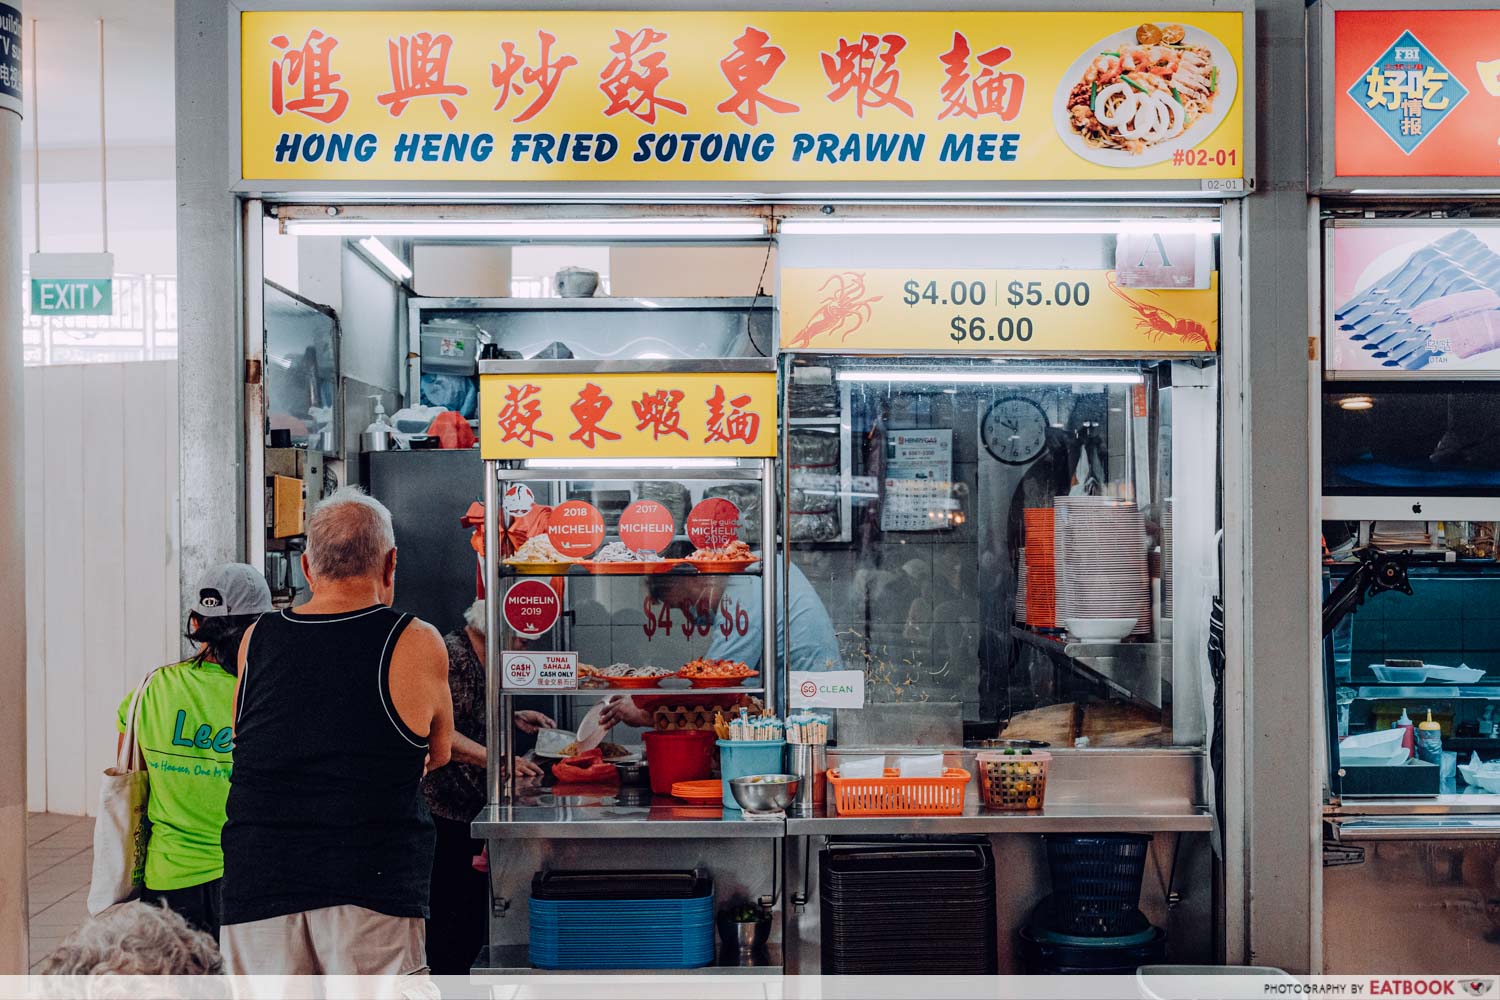 hong heng fried sotong prawn mee - storefront